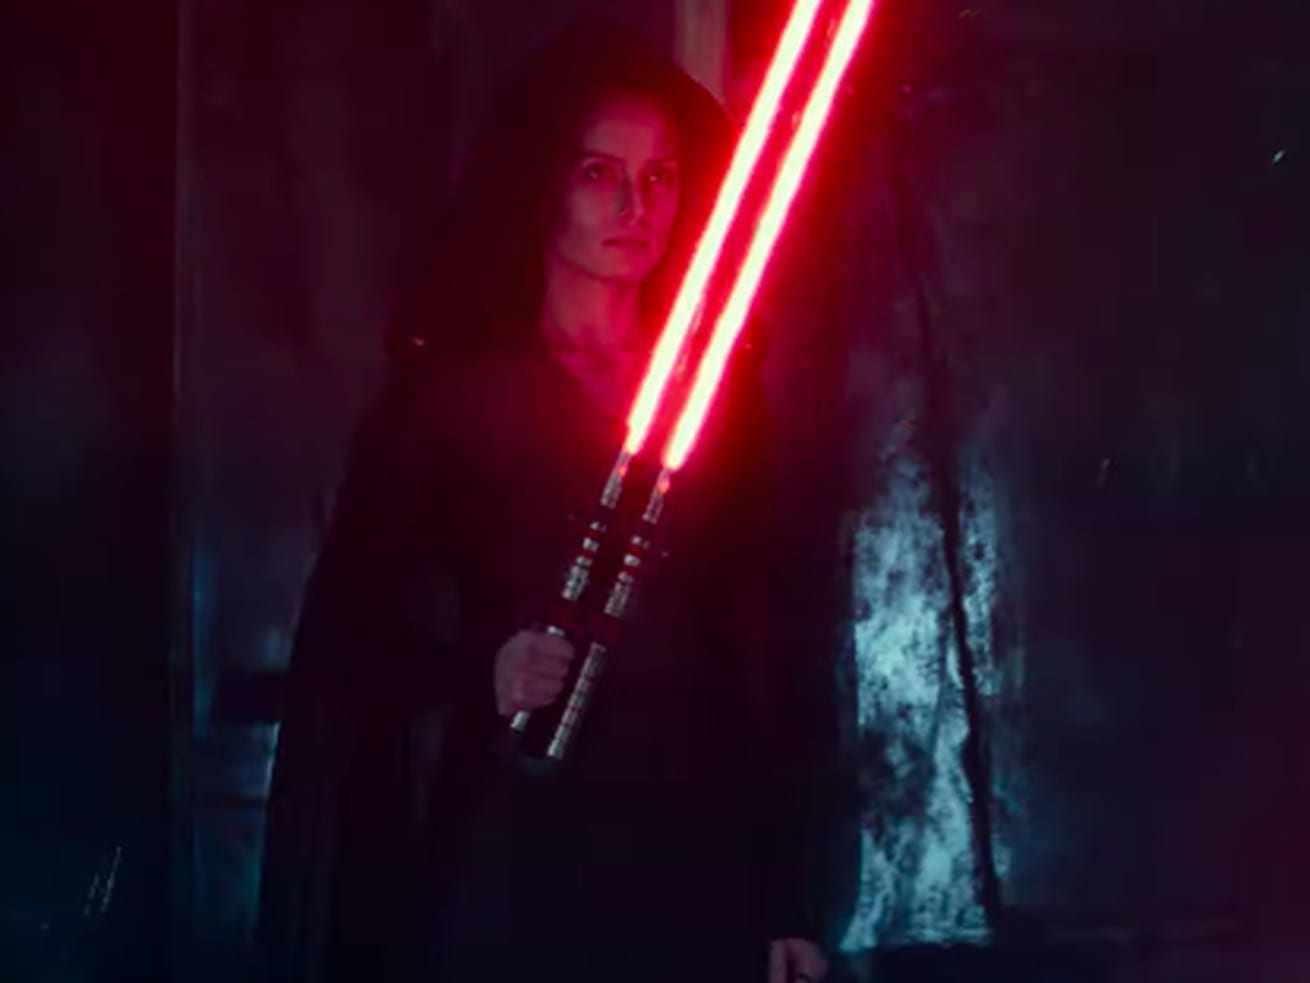 Star Wars: The Rise of Skywalker’s D23 trailer teases an “evil” Rey